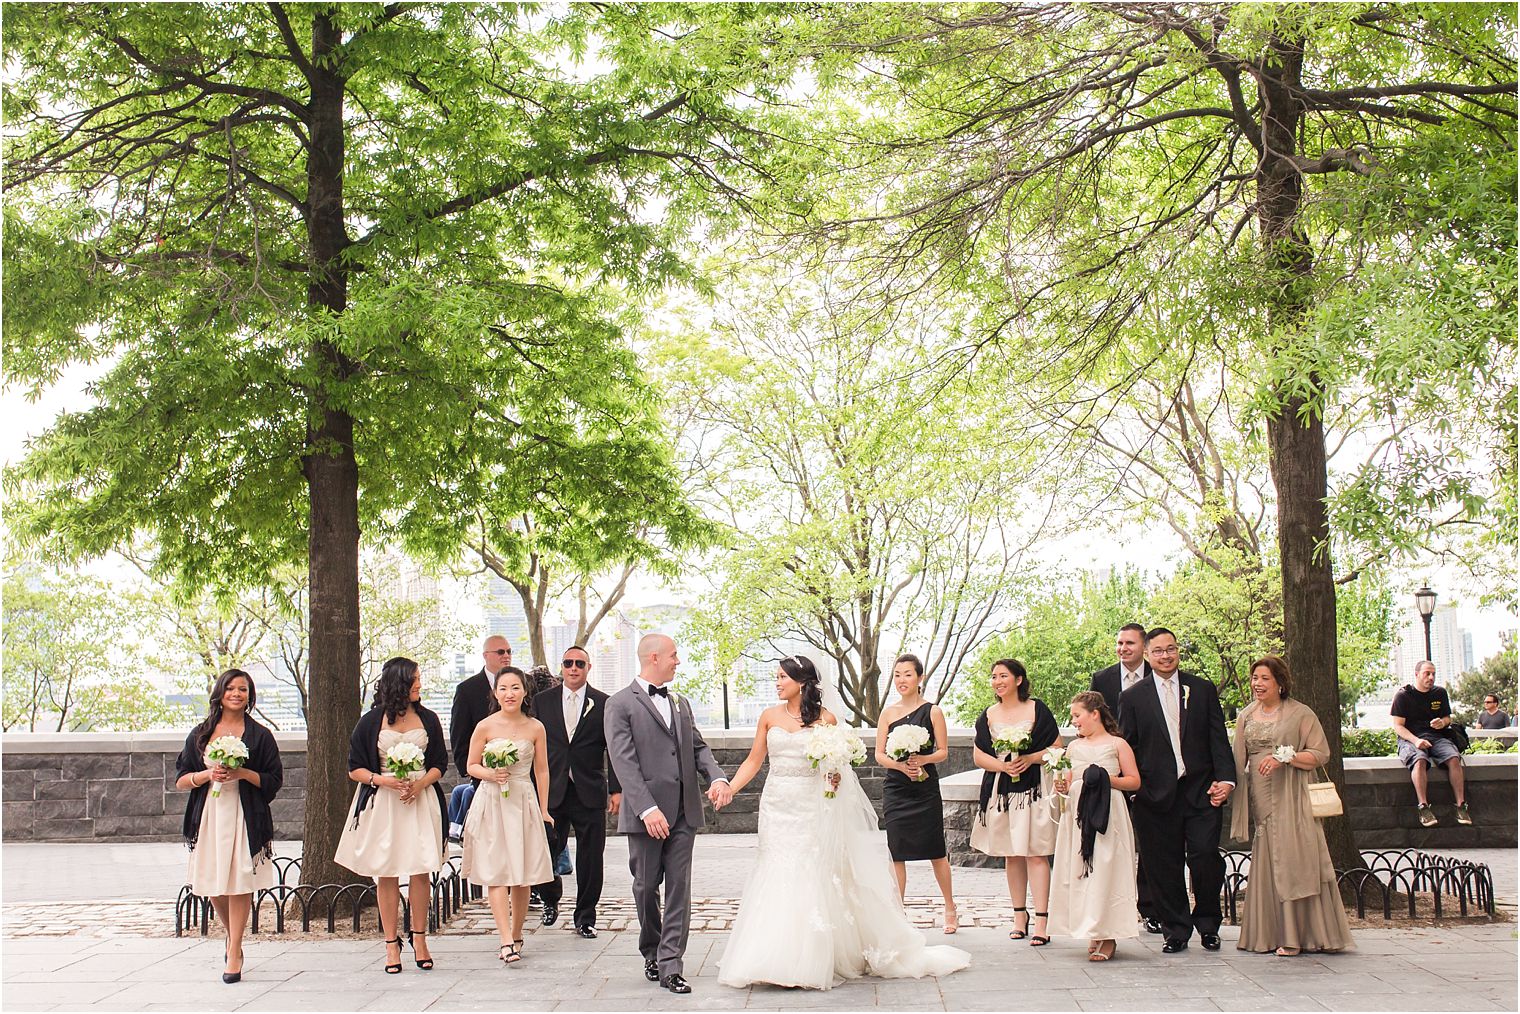 Riverview Terrace bridal party walking photo